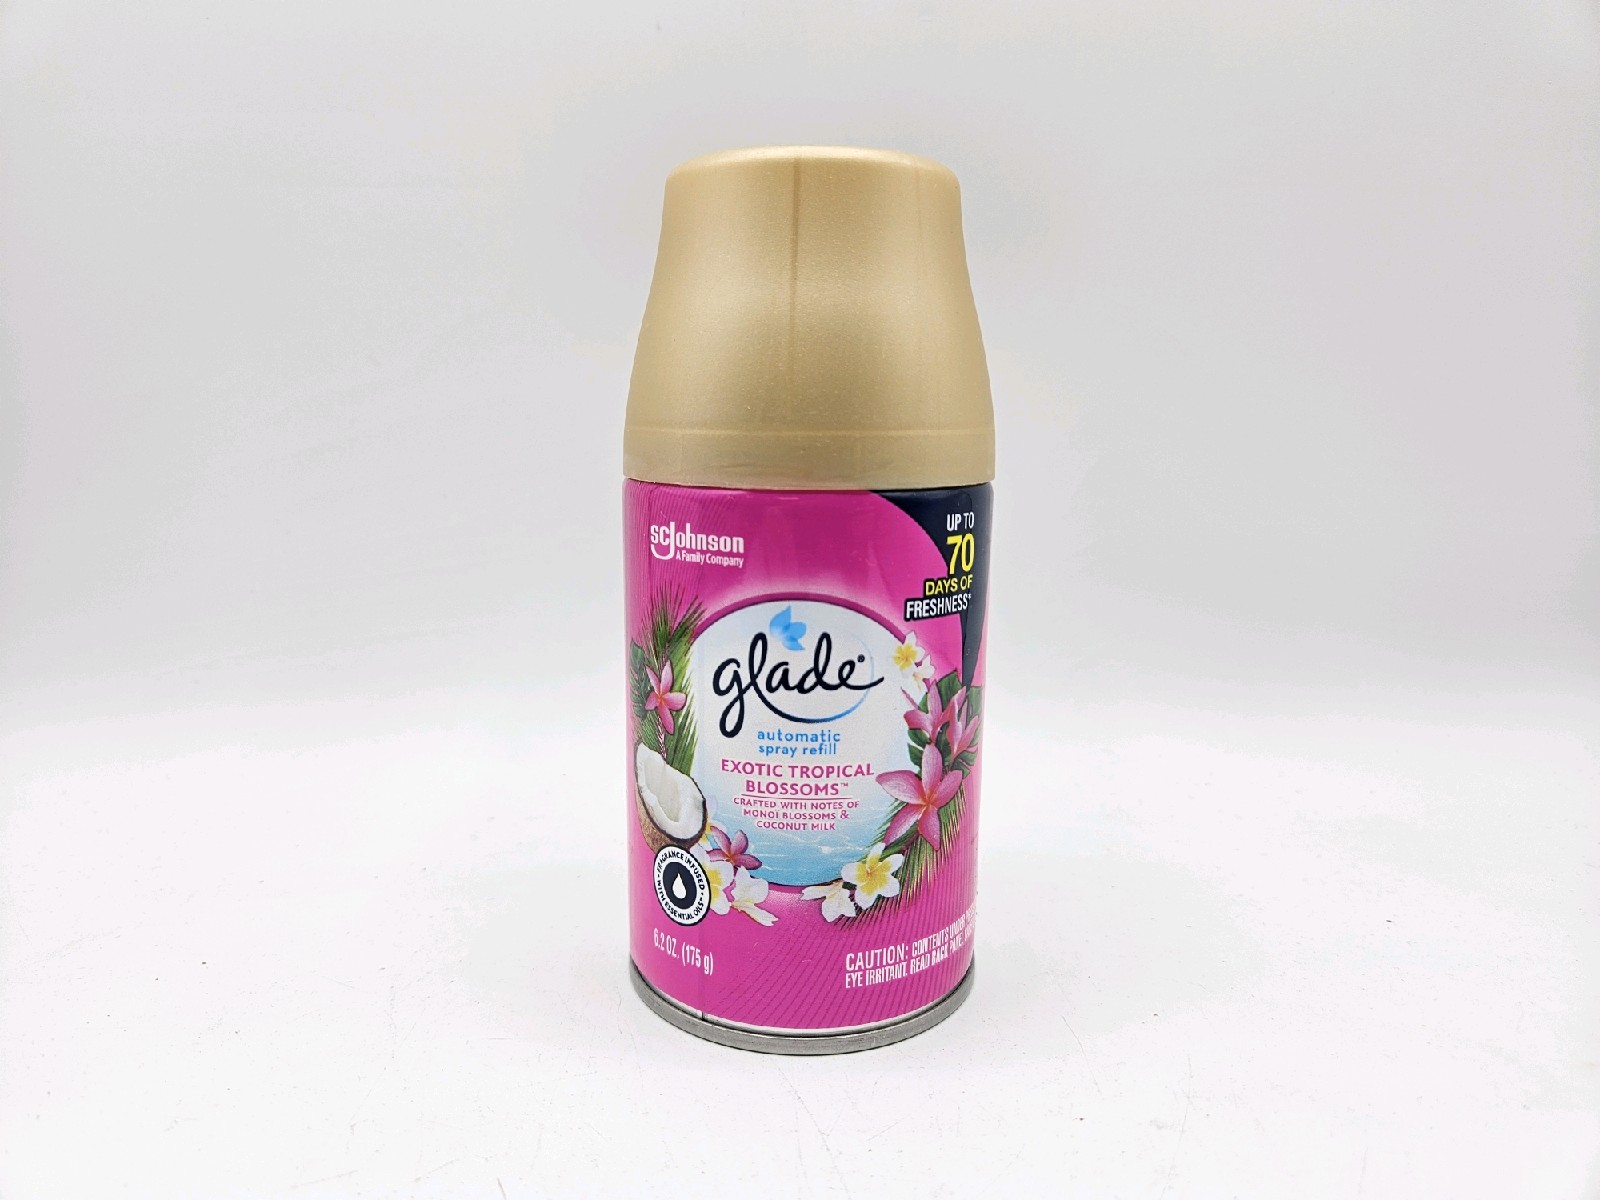 Glade Automatic Spray Refill Air Freshener